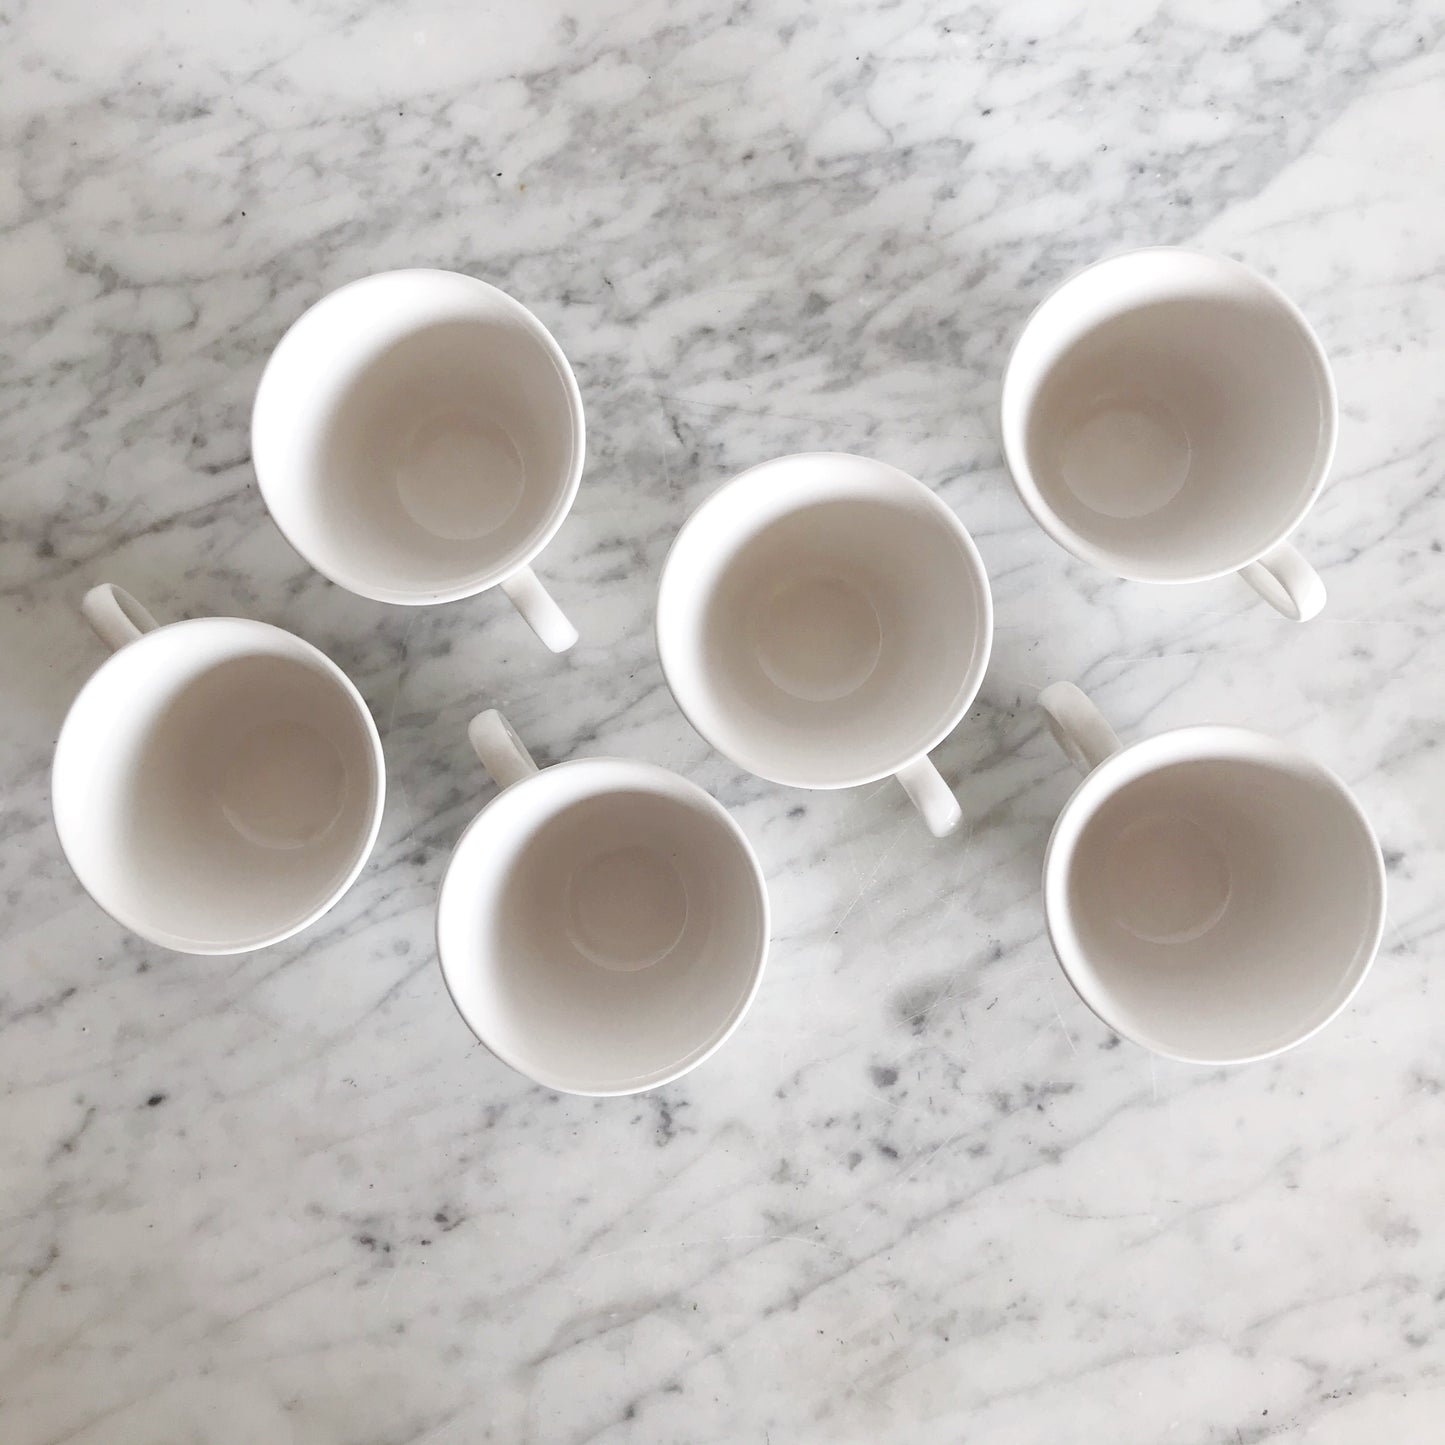 Vintage White Ceramic Cups + Saucers, 12-pc Set